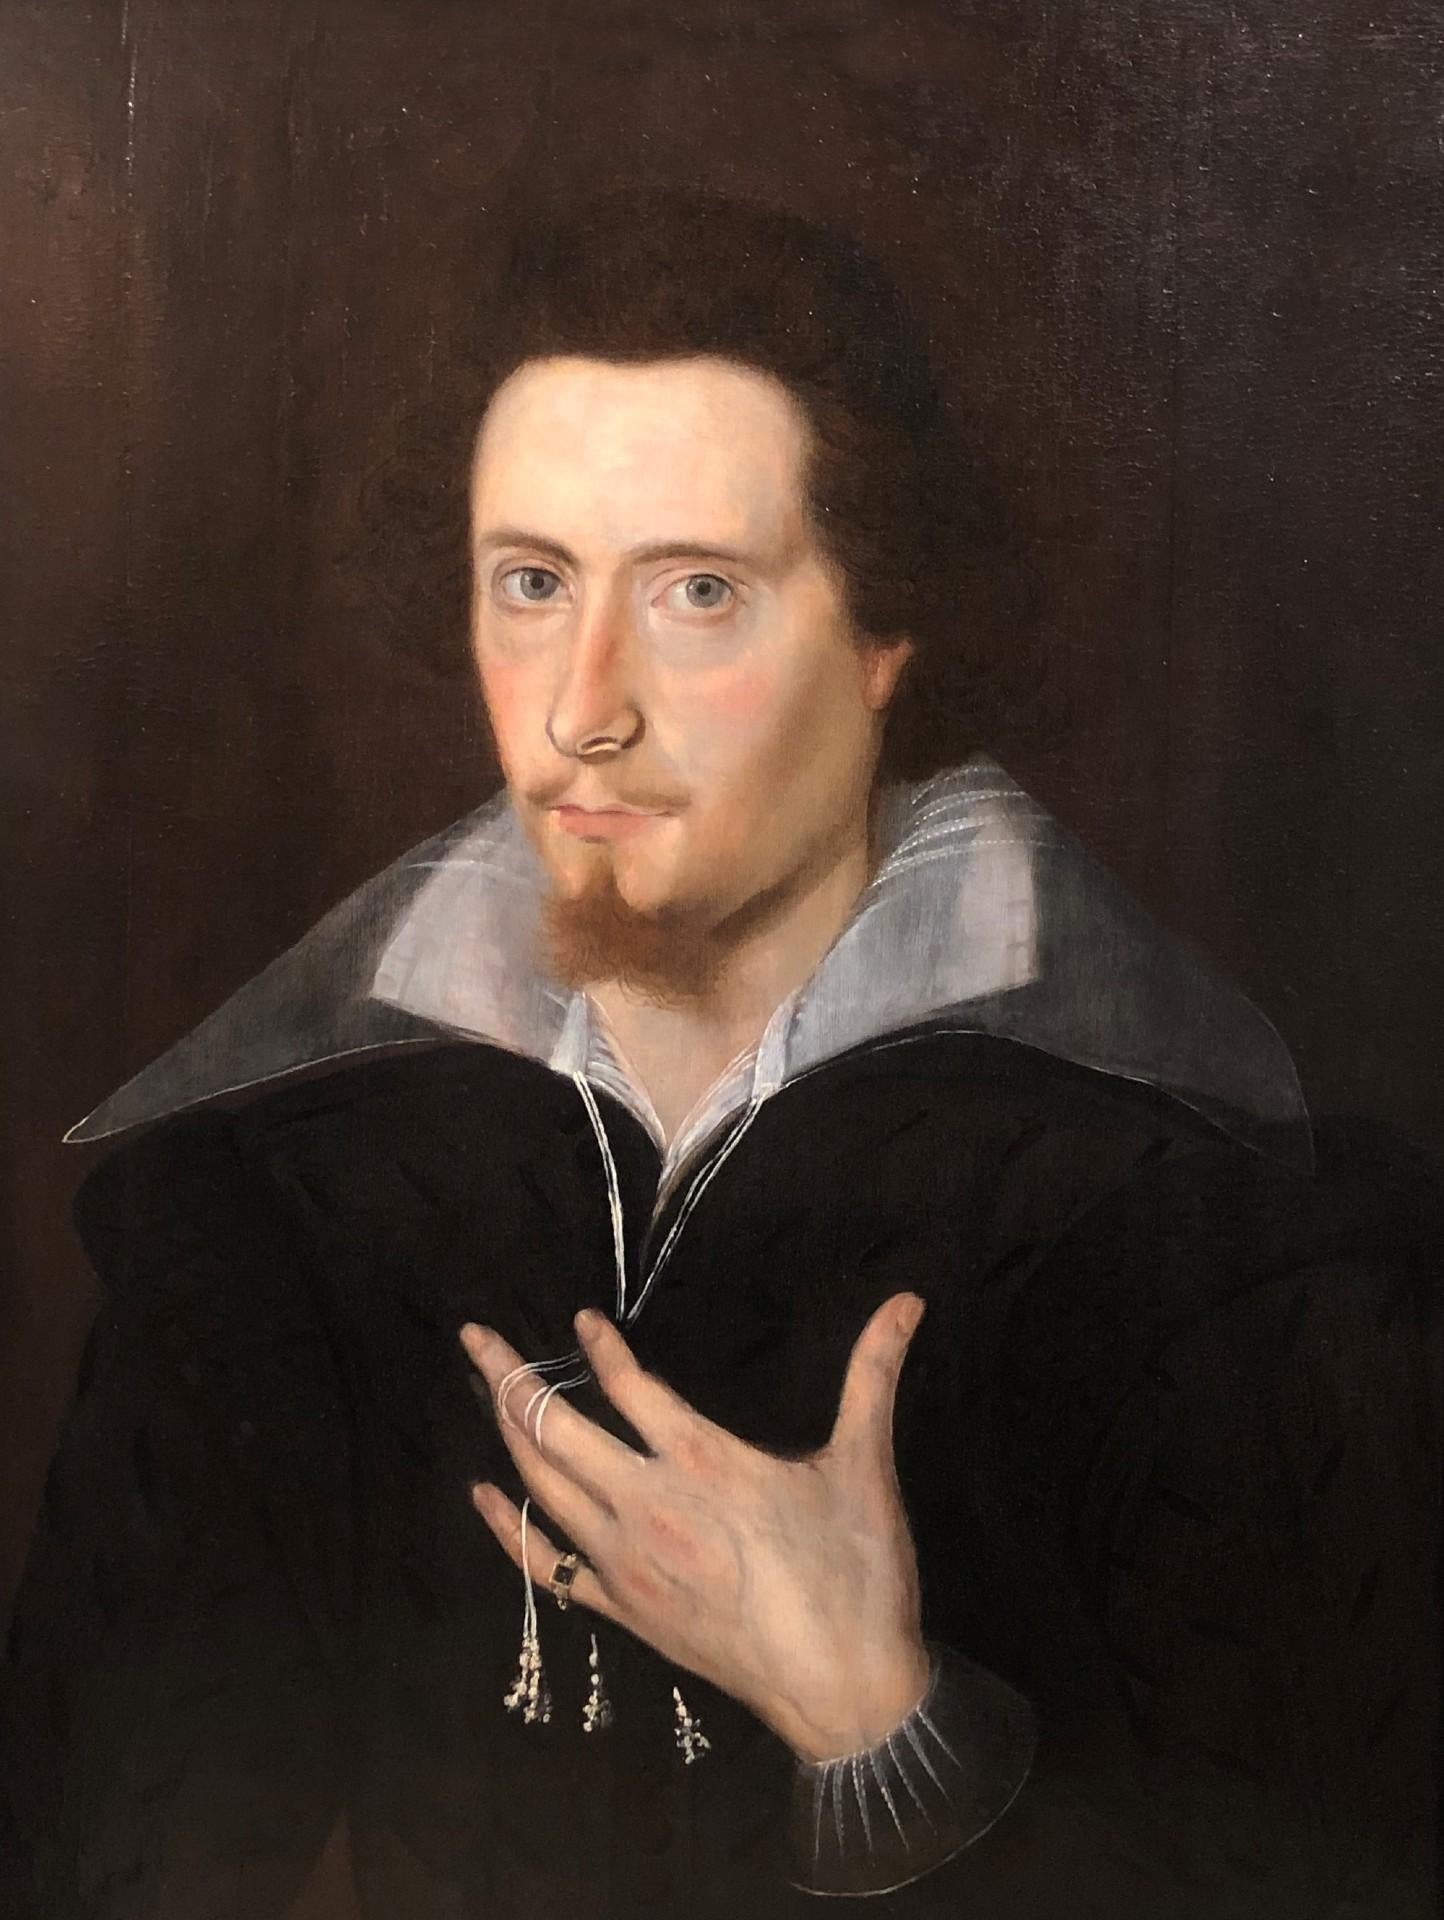 Possible Portrait of William Shakespeare